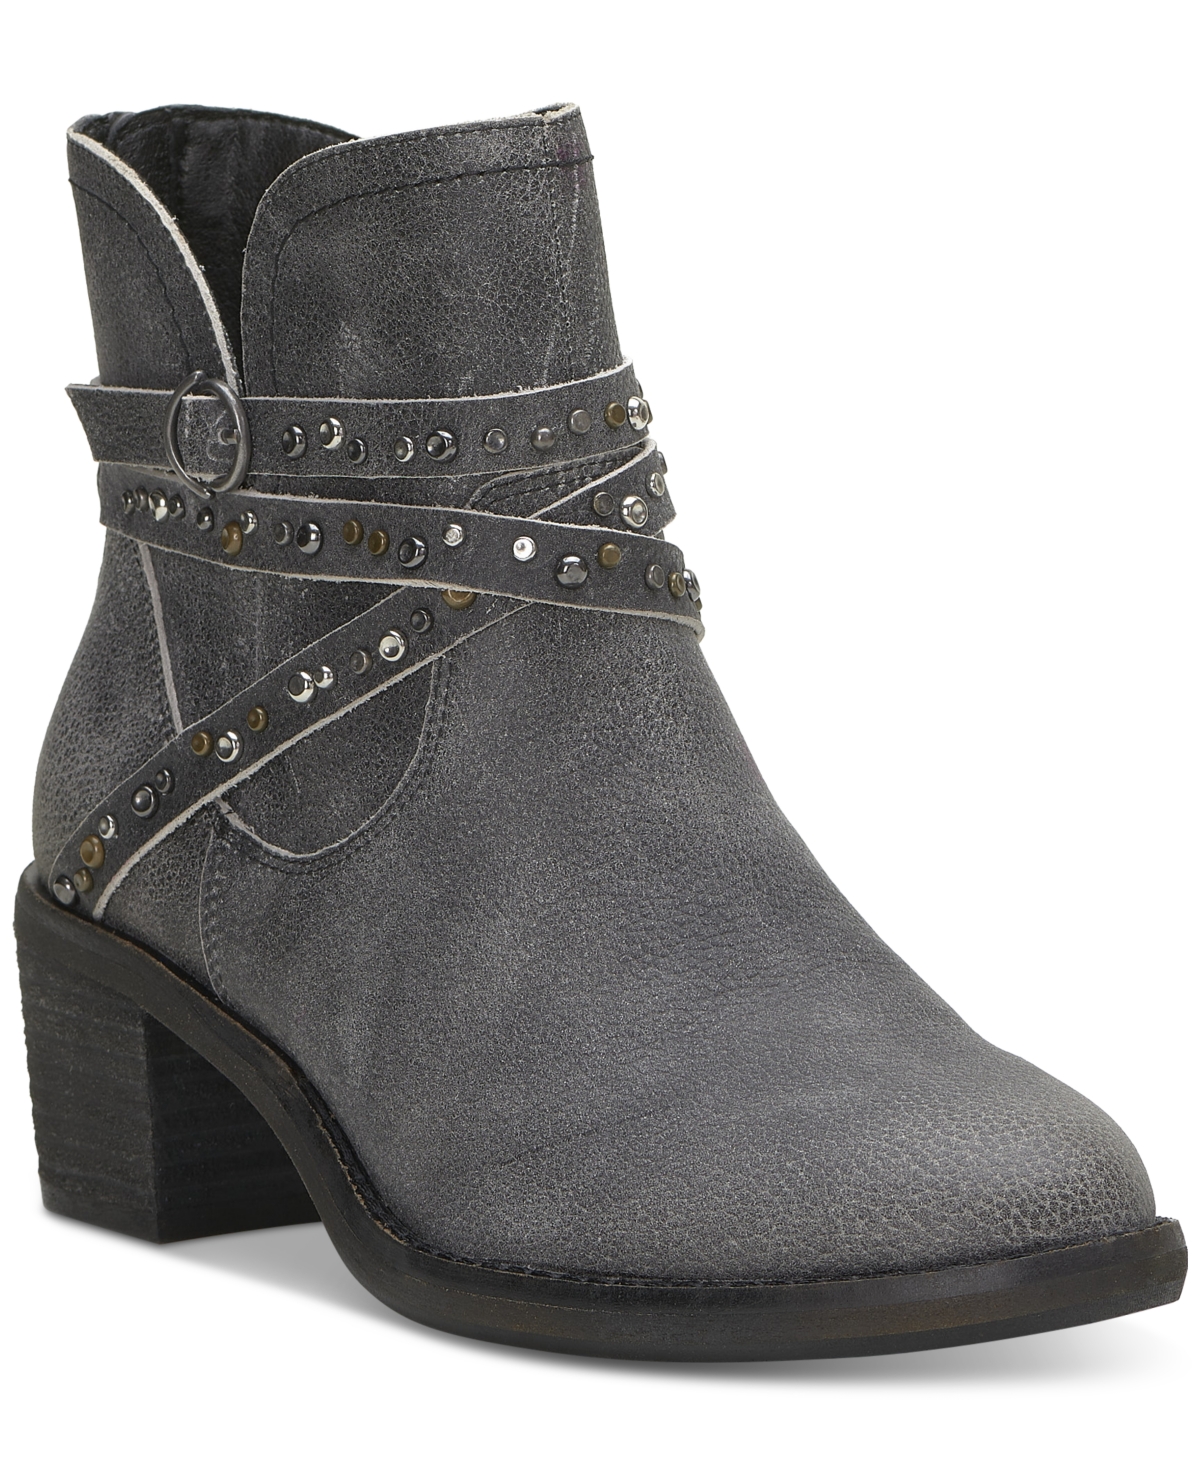 Women's Callam Studded Strap Block-Heel Booties - Charcoal Leather